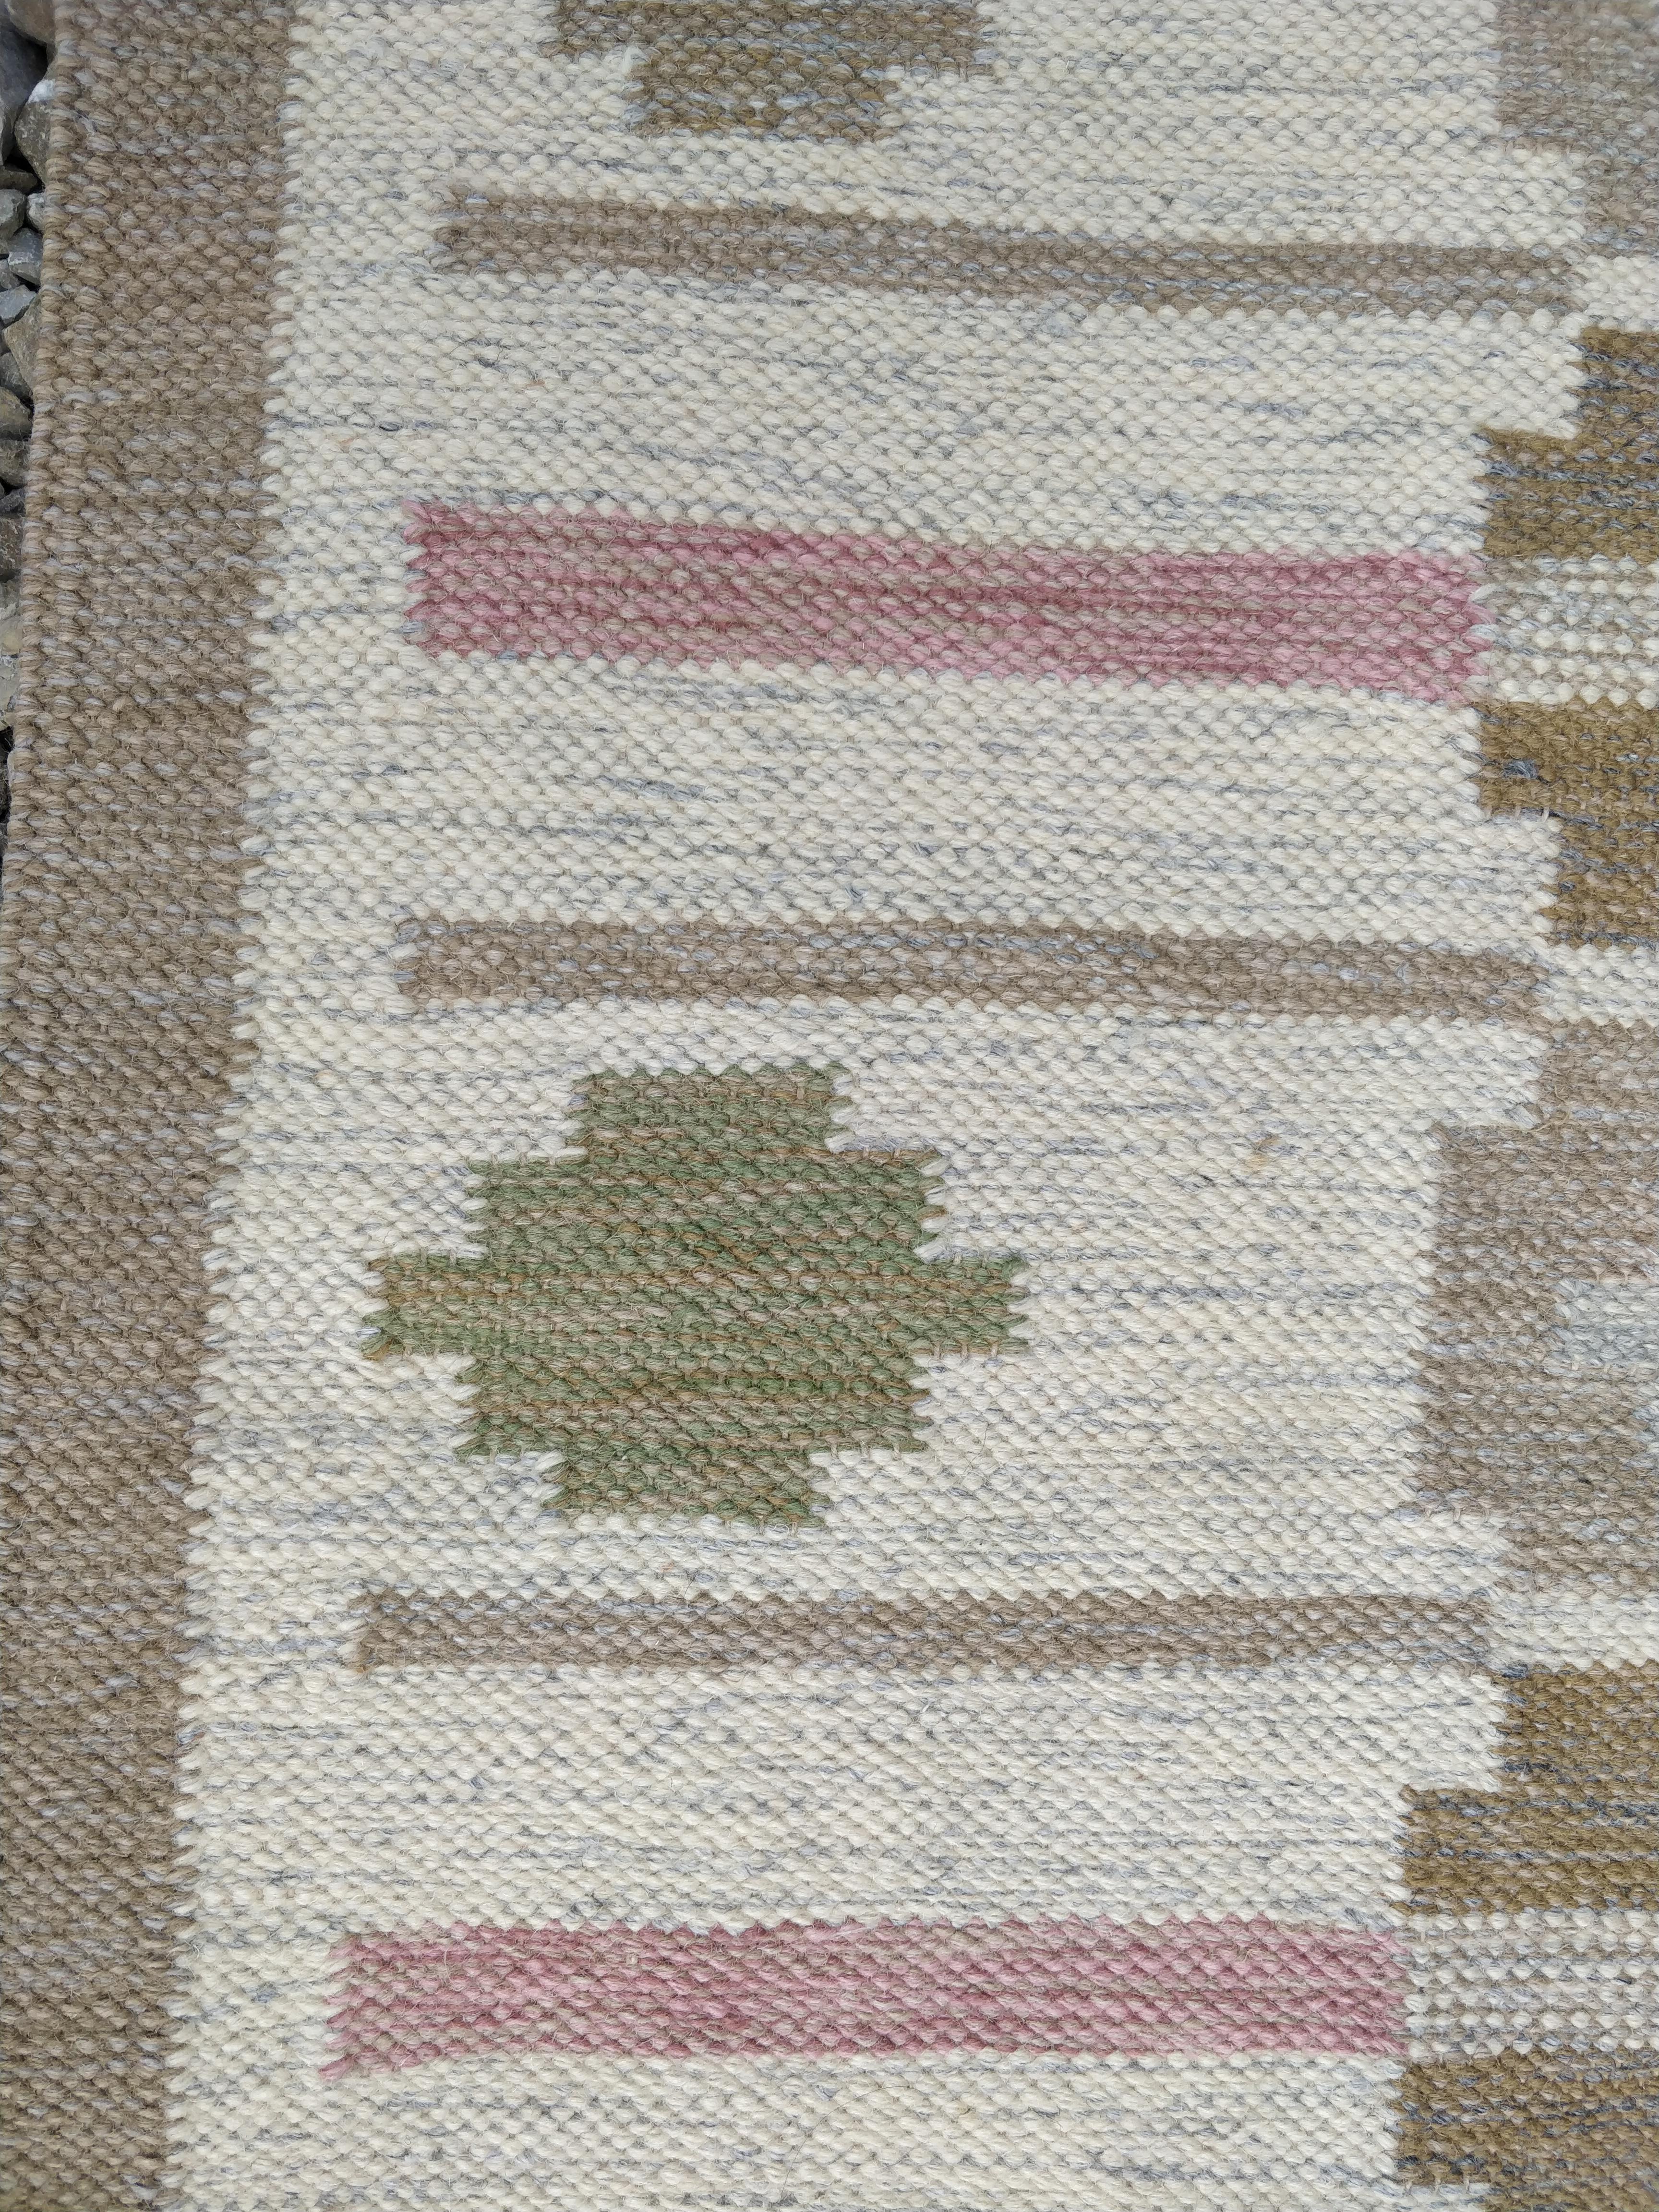  Flat-weave Kilim carpet by Swedish textile designer Anna Johanna Ångström   For Sale 1